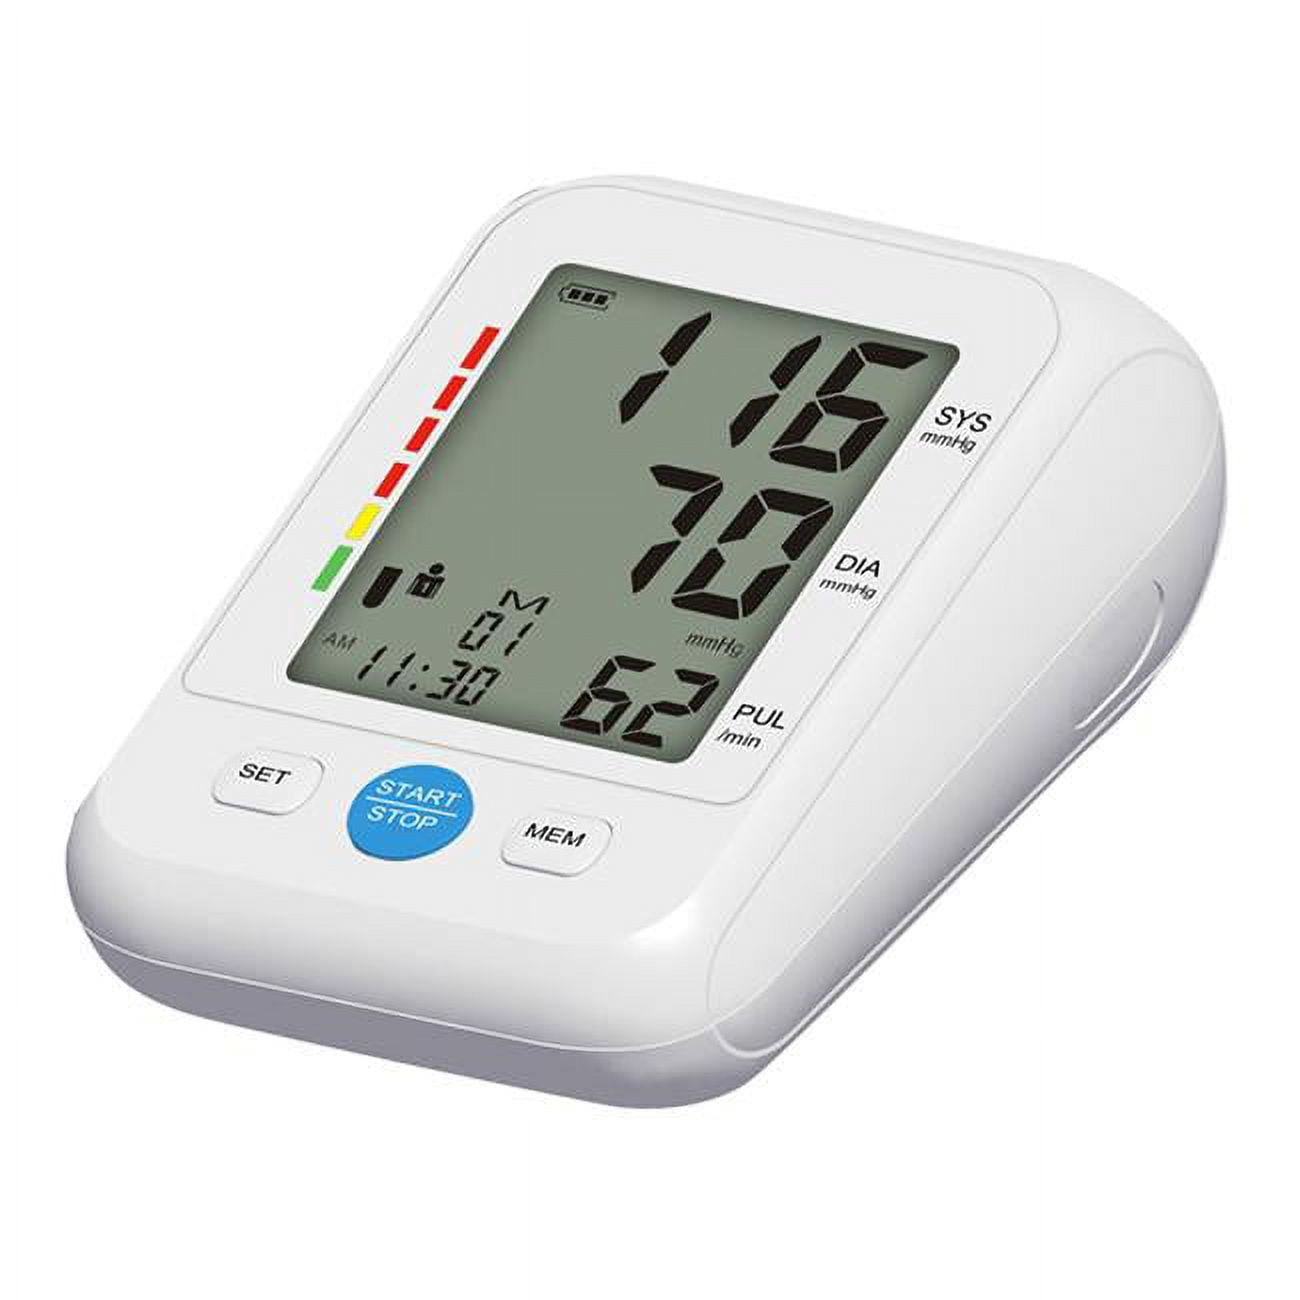 Procare 240388 Premium Upper Arm Blood Pressure Monitor with Wide Range Cuff